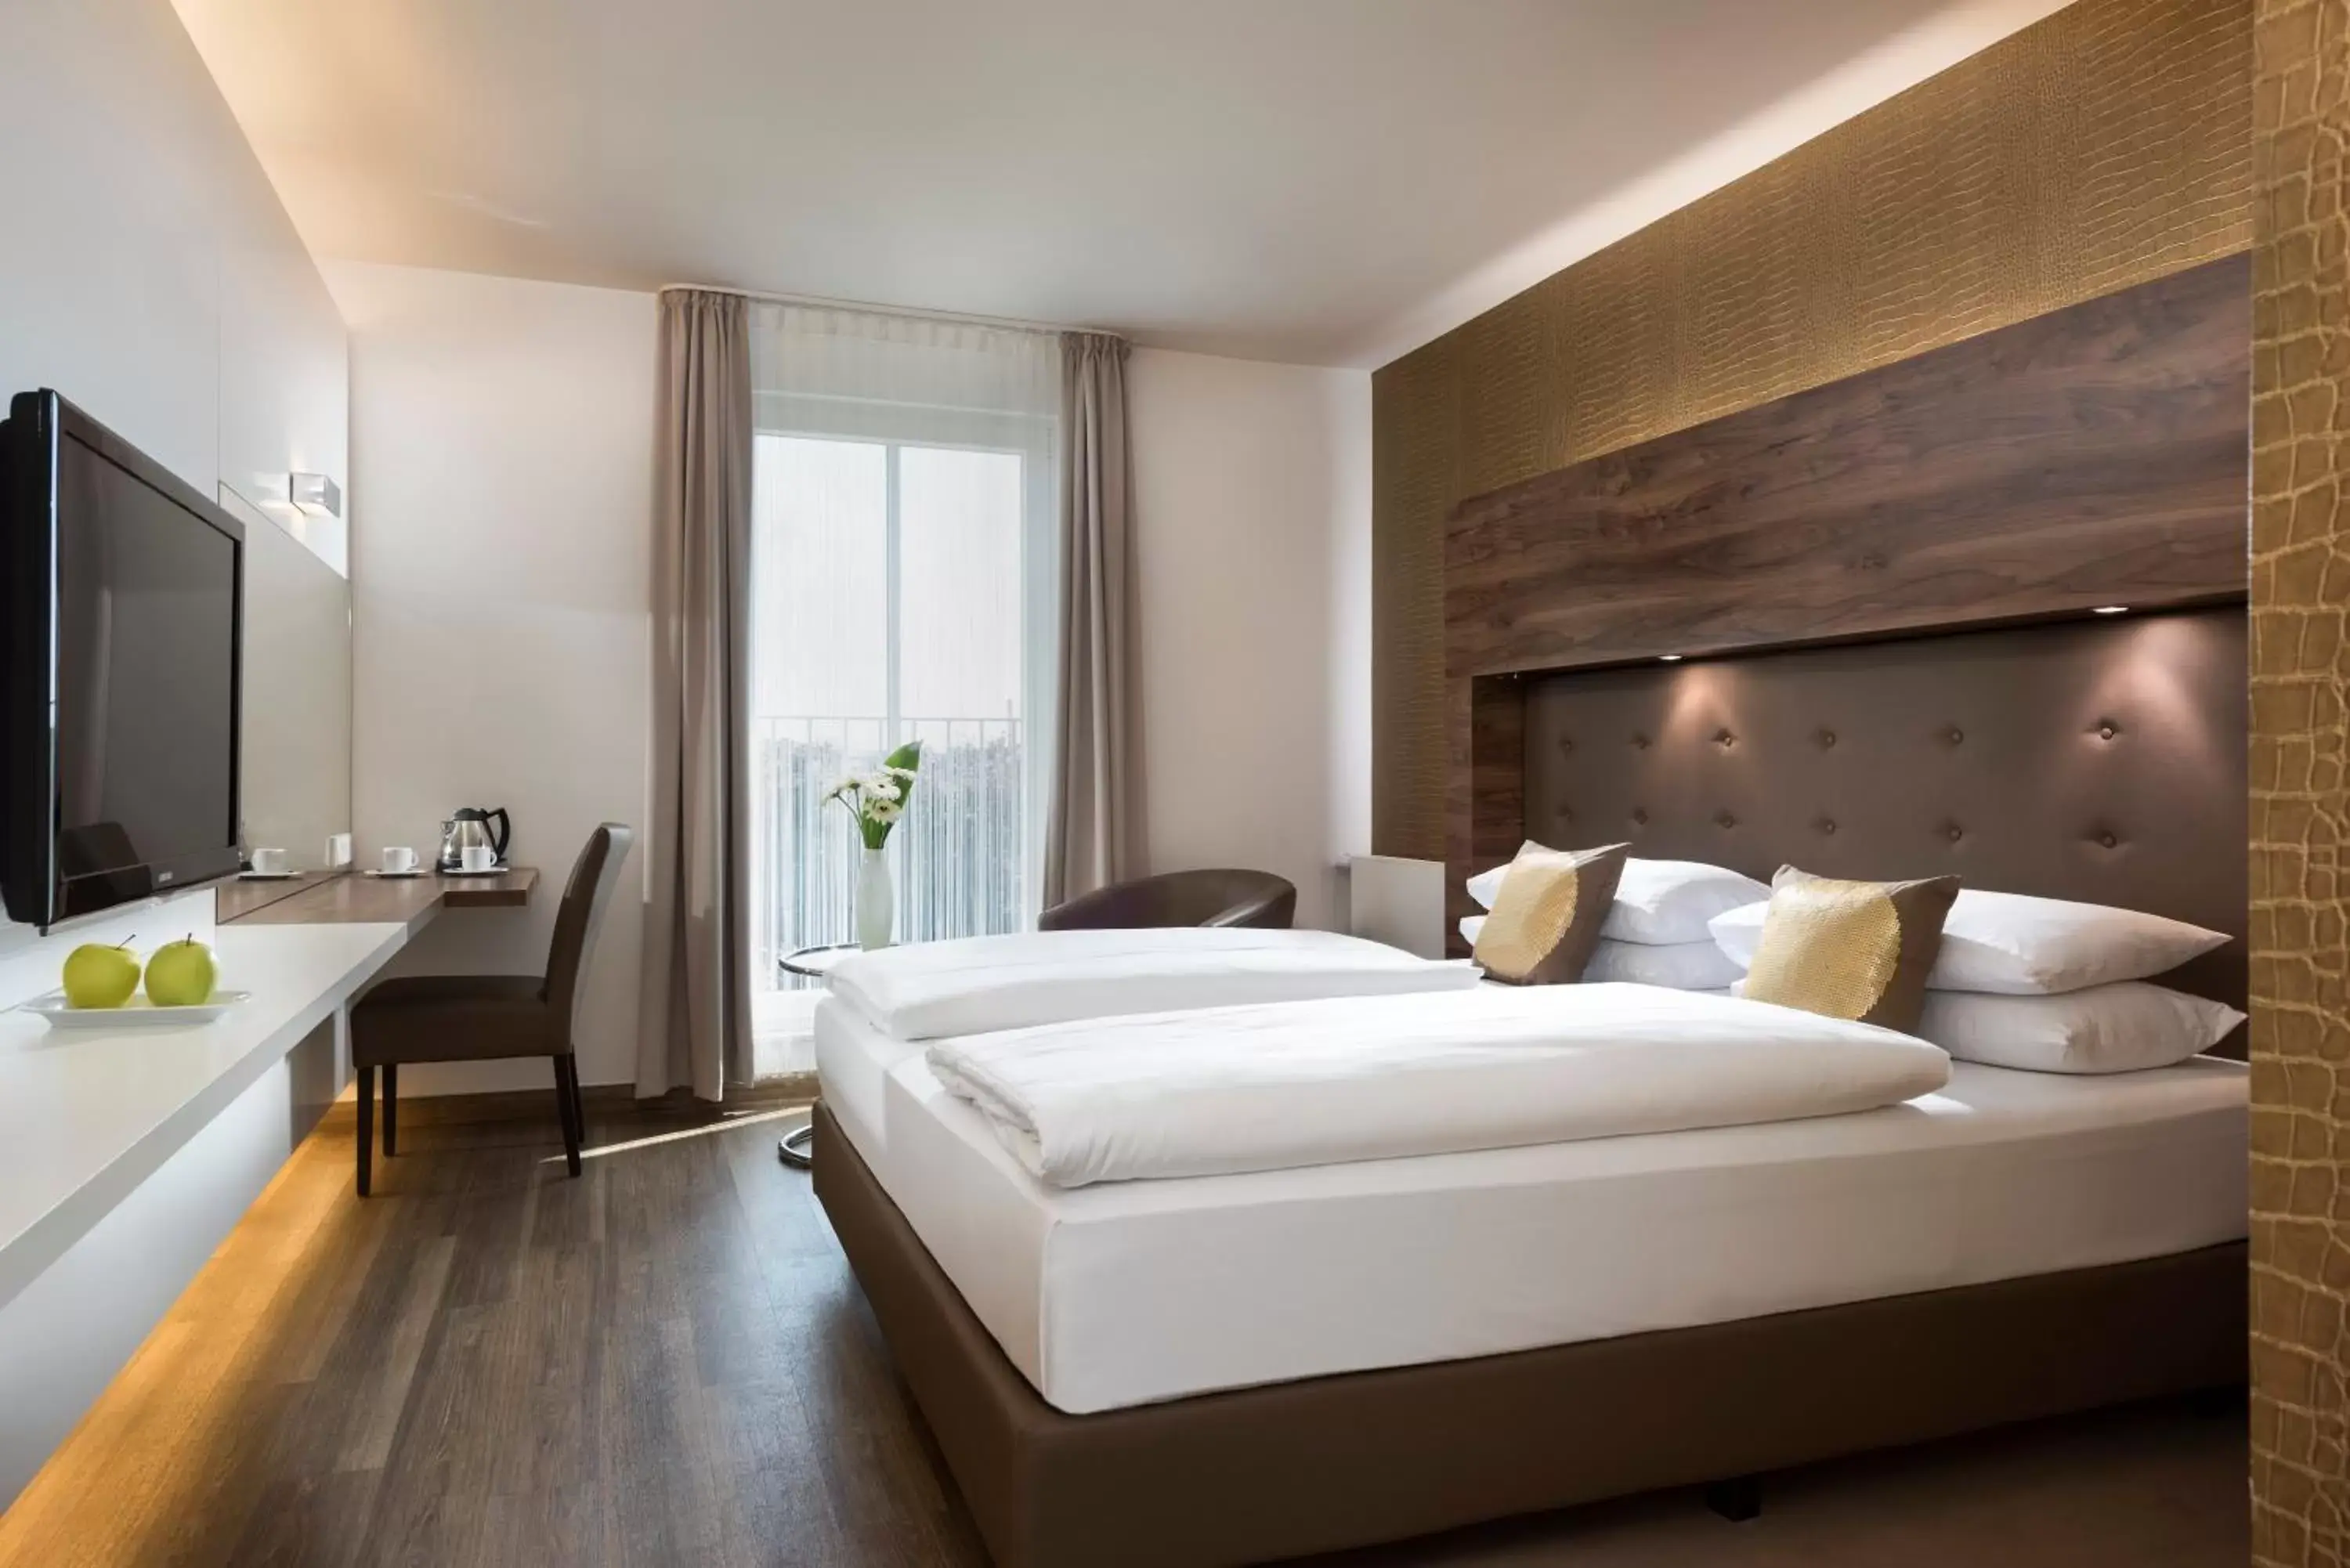 Bed in Hotel Conti Duisburg - Partner of SORAT Hotels